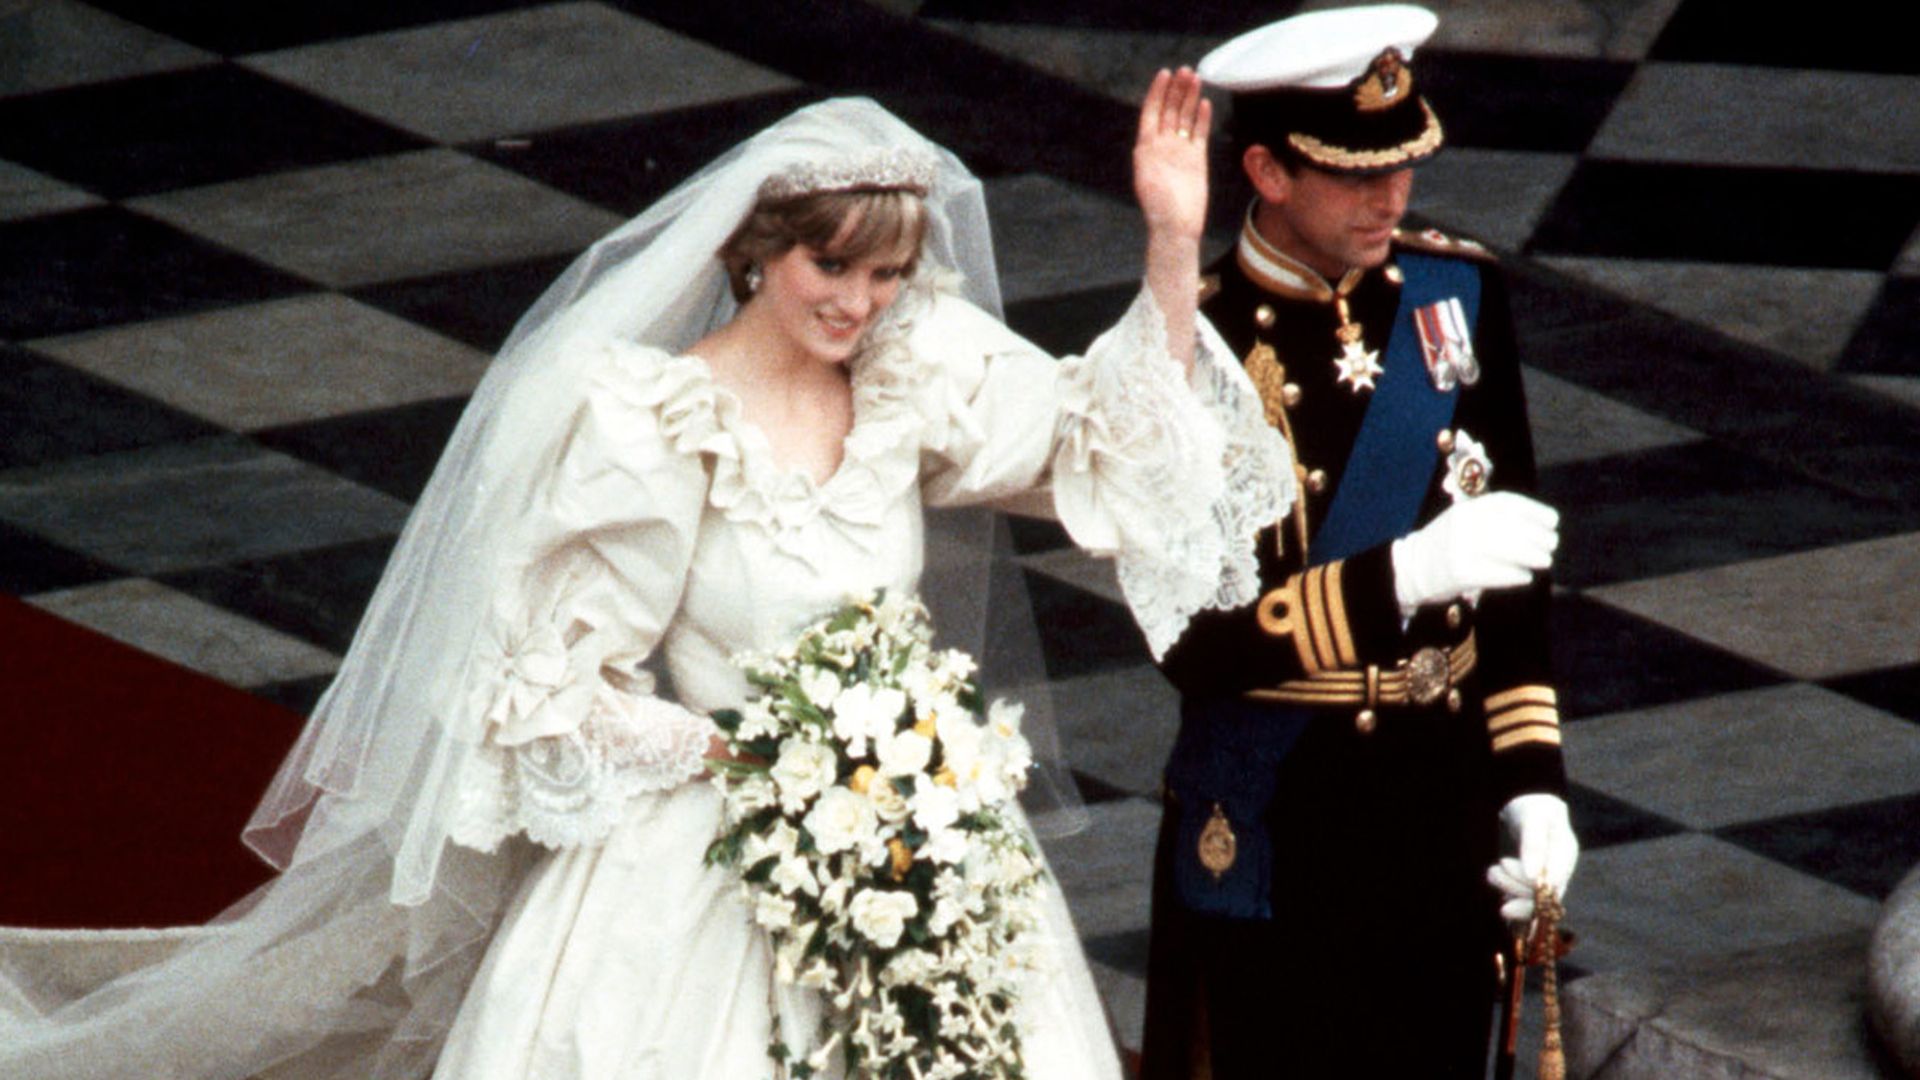 Princess Diana thanked her wedding dress designer David Emanuel in the sweetest way